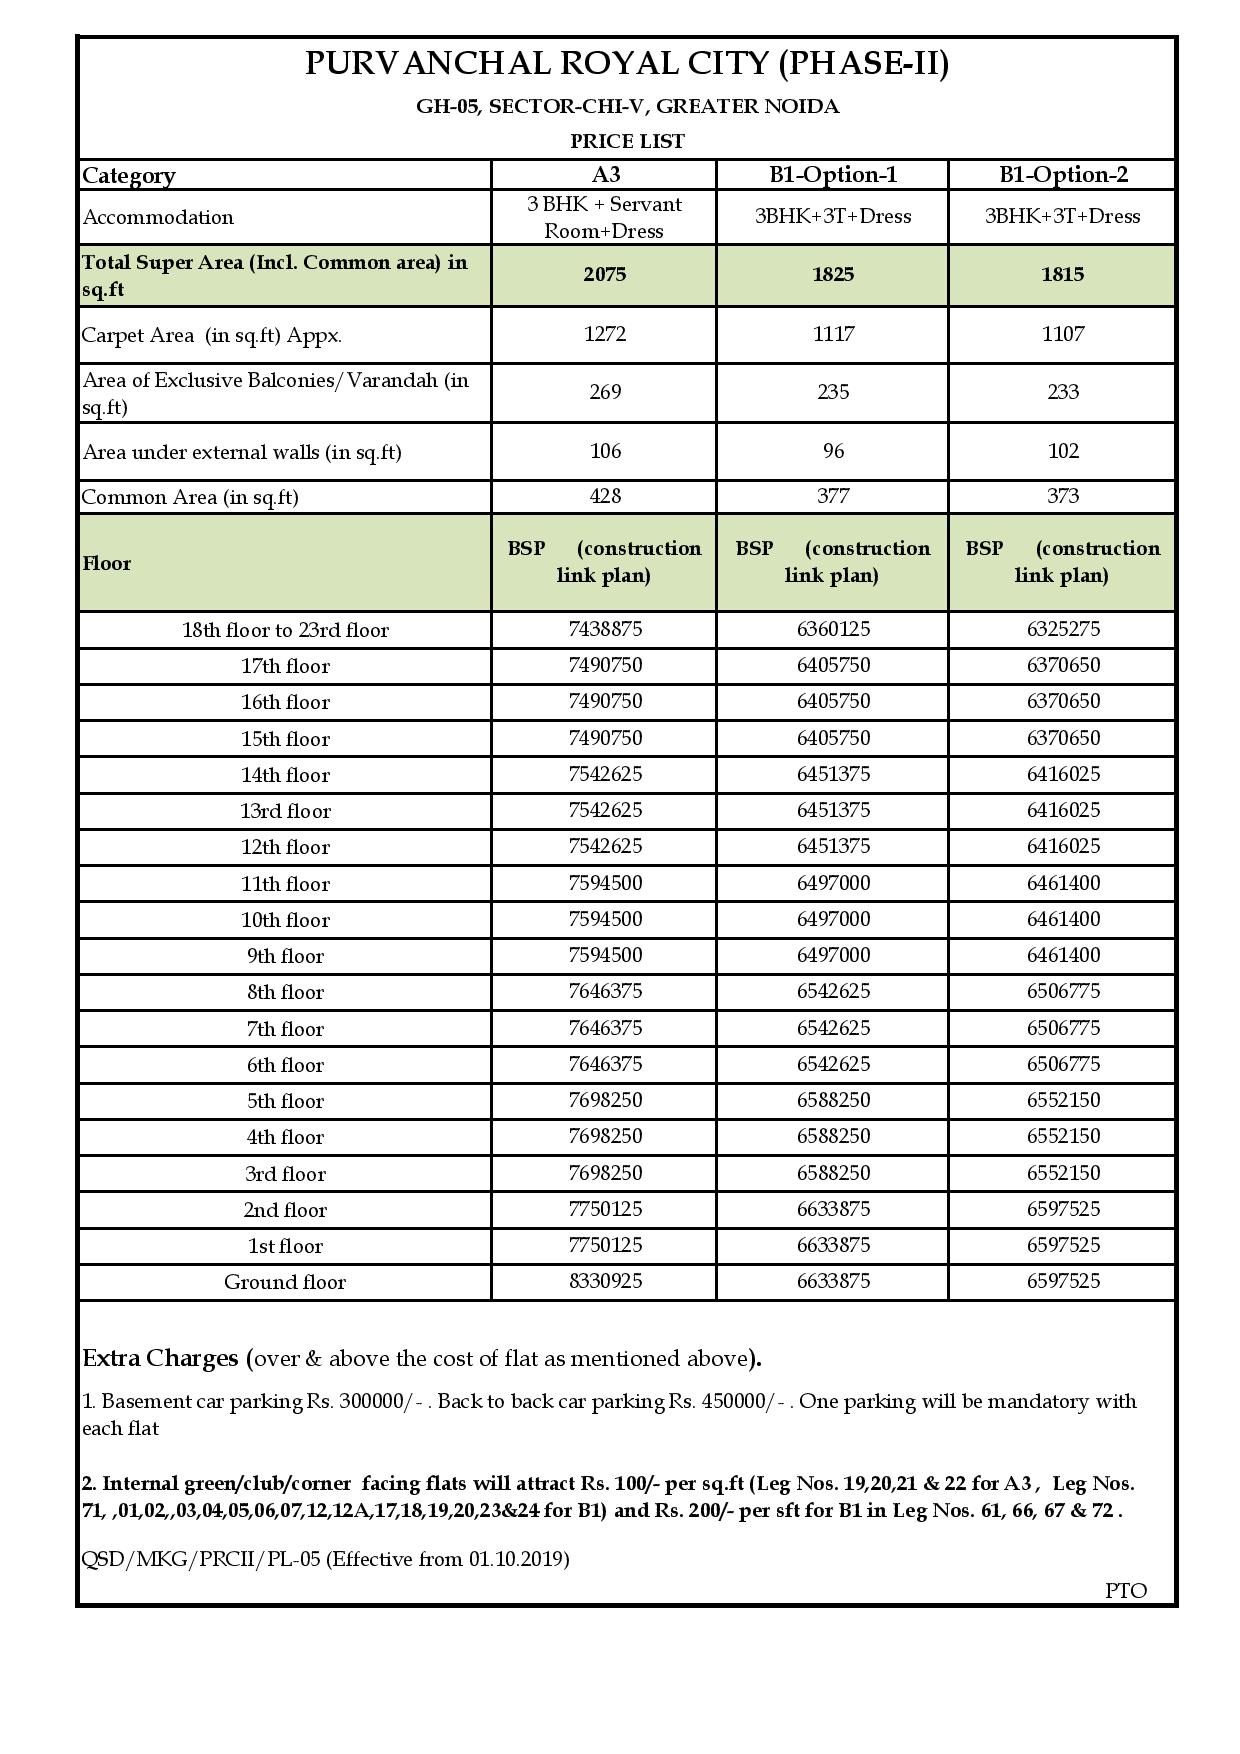 Purvanchal Royal City Phase 2 Price List